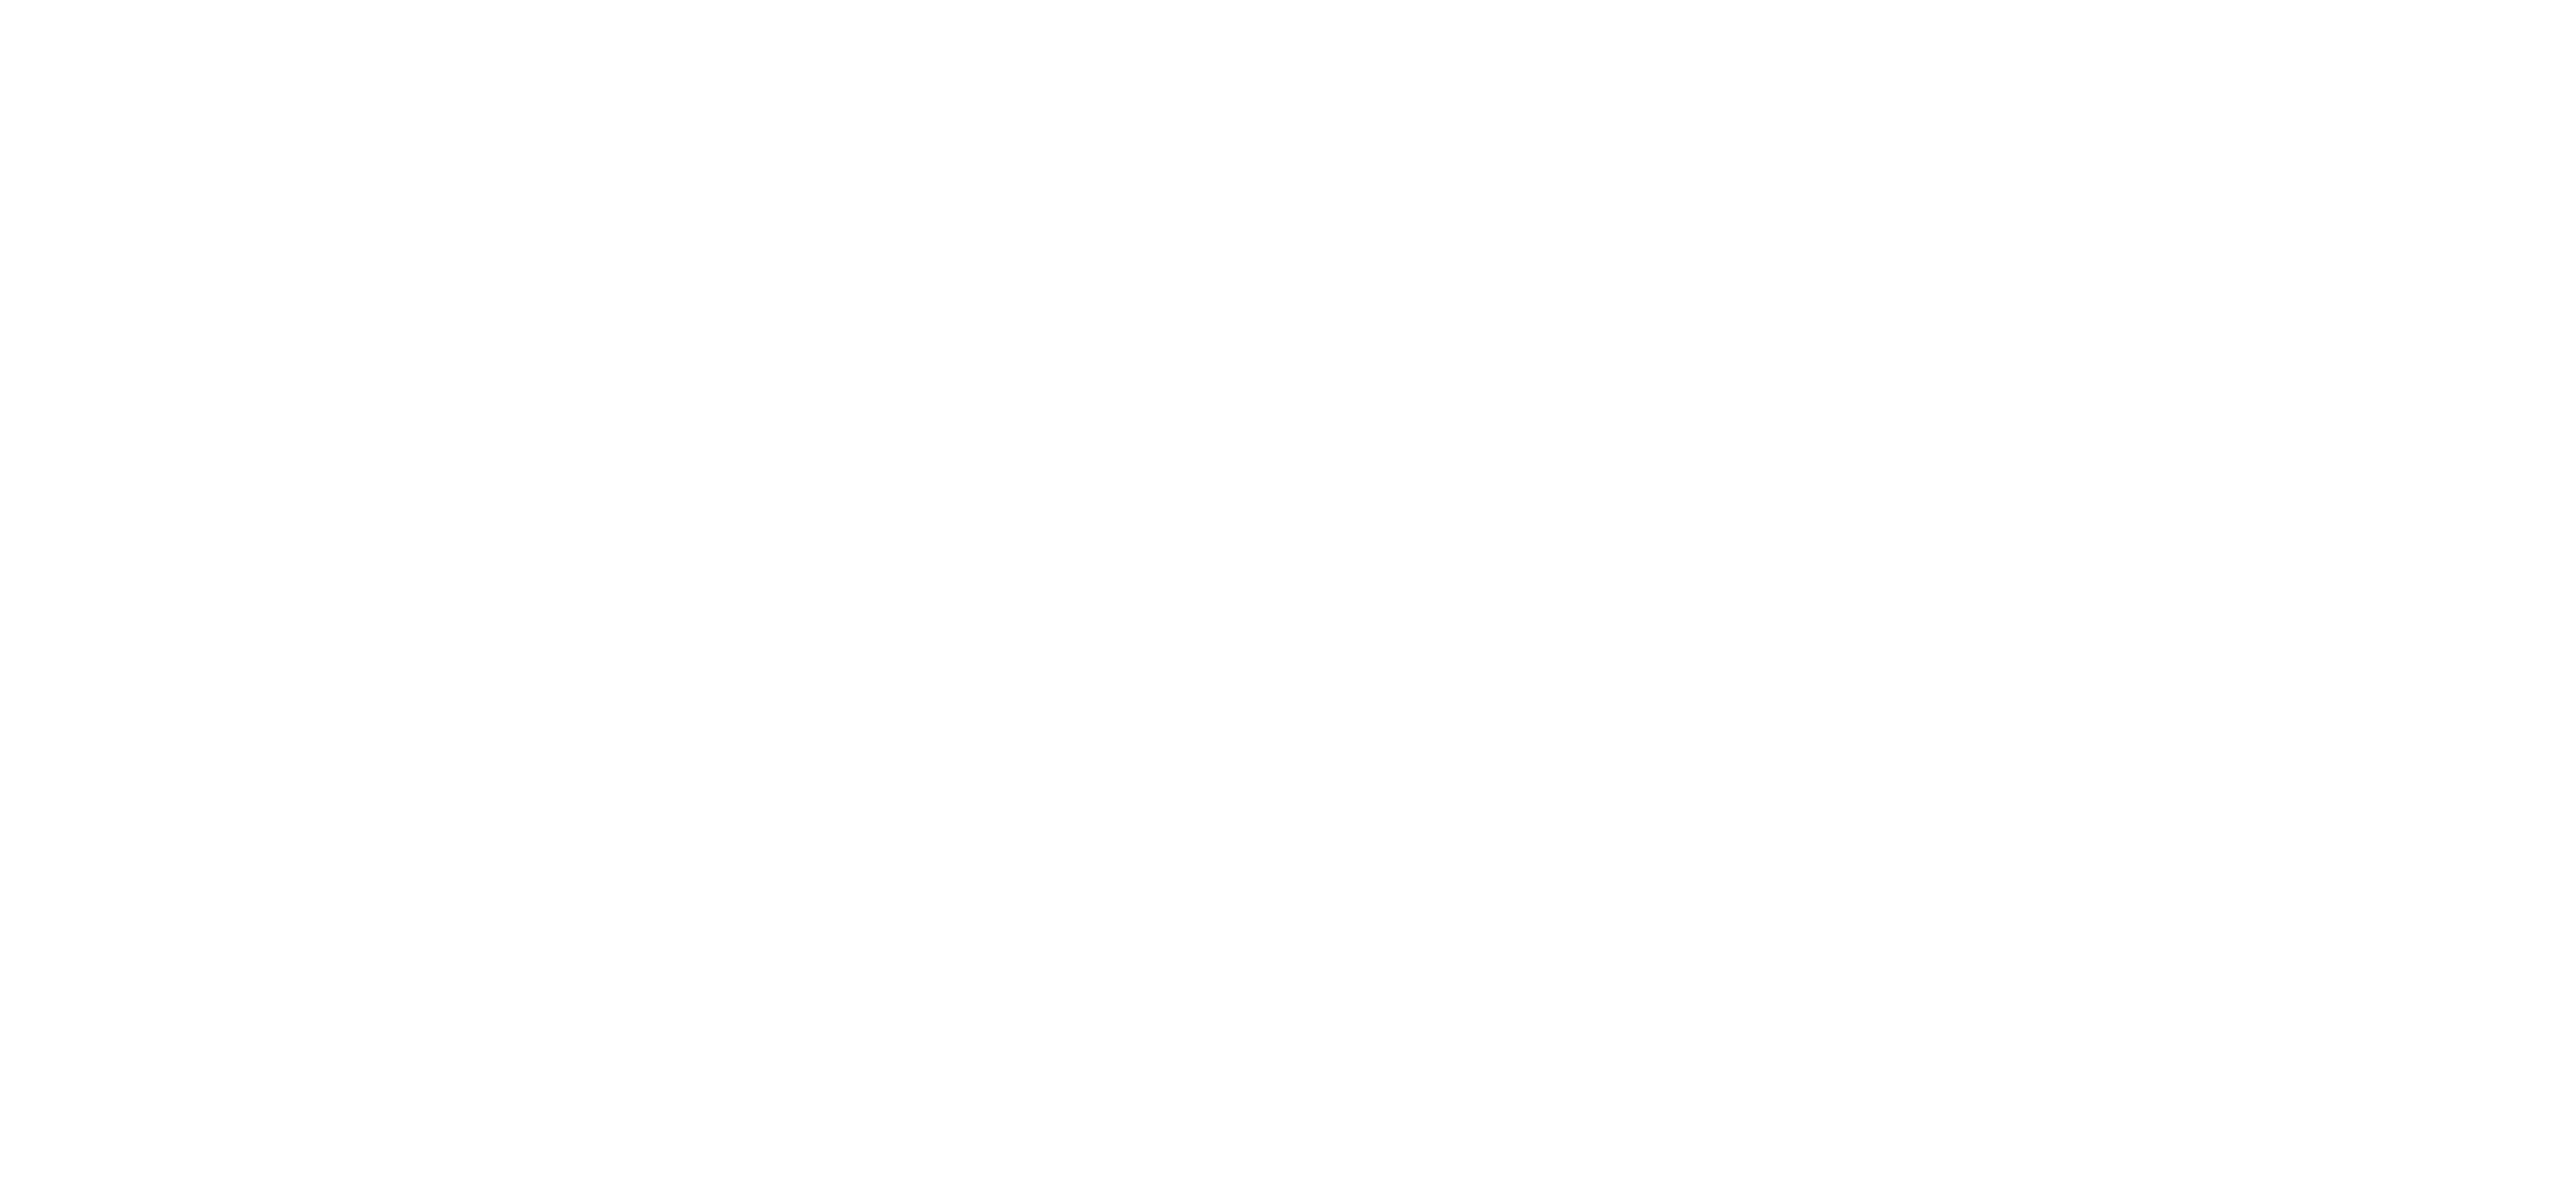 TrustQuay logo TrustQuay Online White